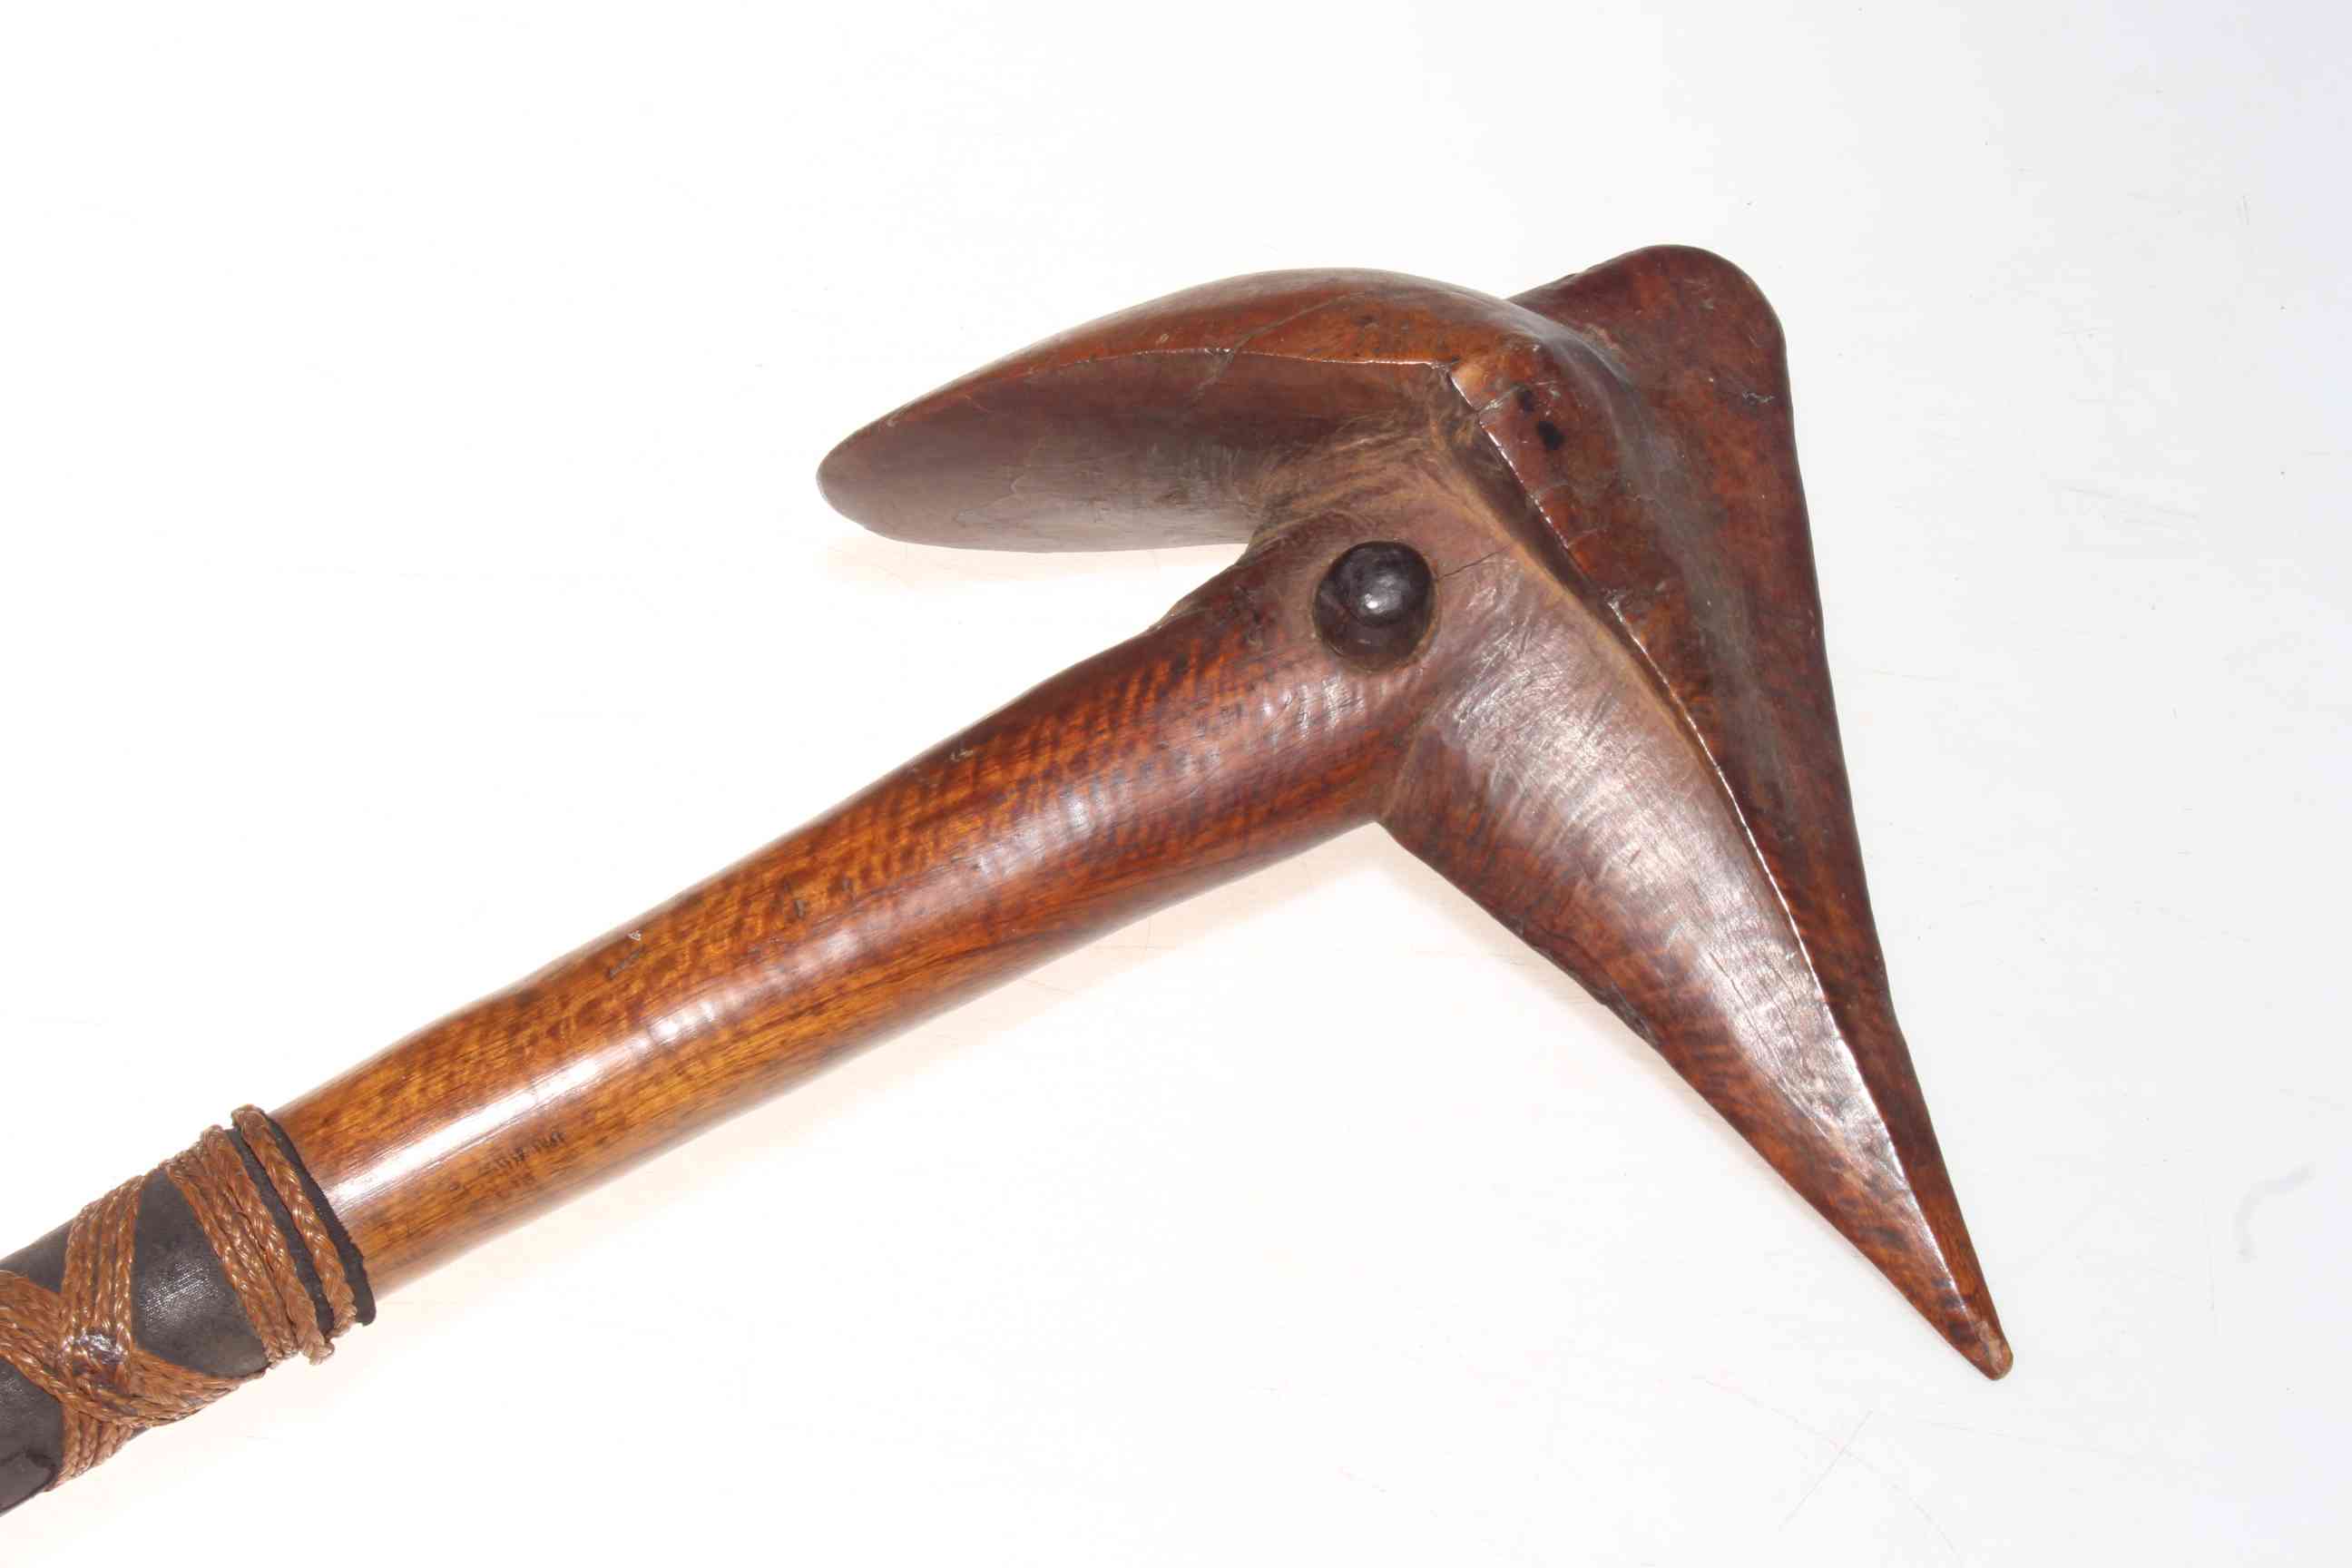 New Caledonia Kanak bird club, porowa ra maru, having material handle bound with coconut/flax cord, - Image 4 of 5